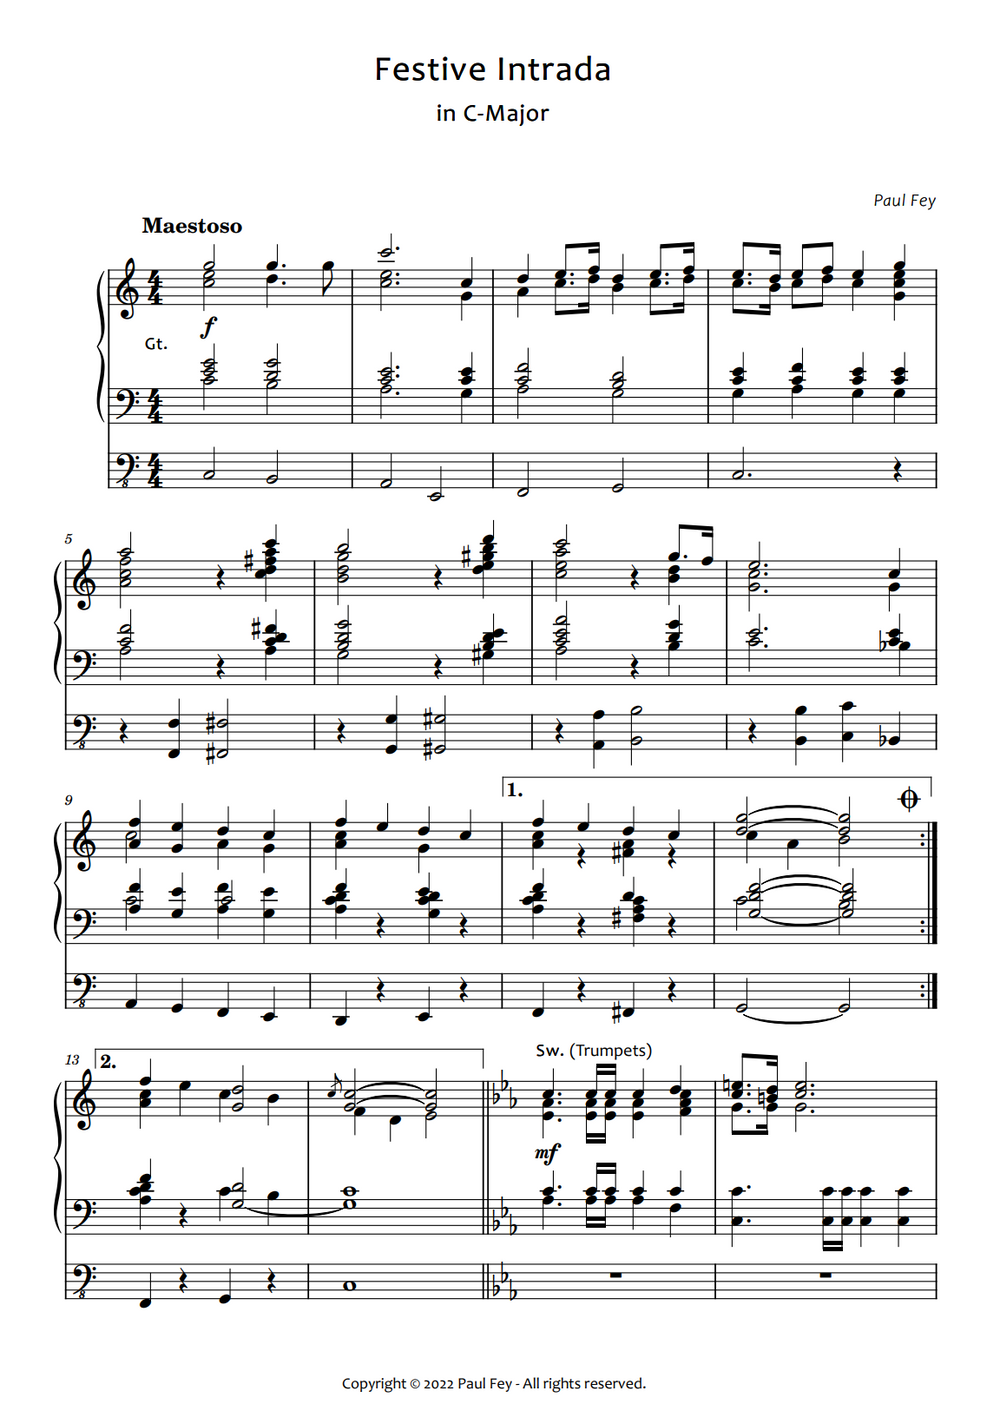 Festive Intrada" in C-Major for Organ (Sheet Music) - Music for Pipe Organ